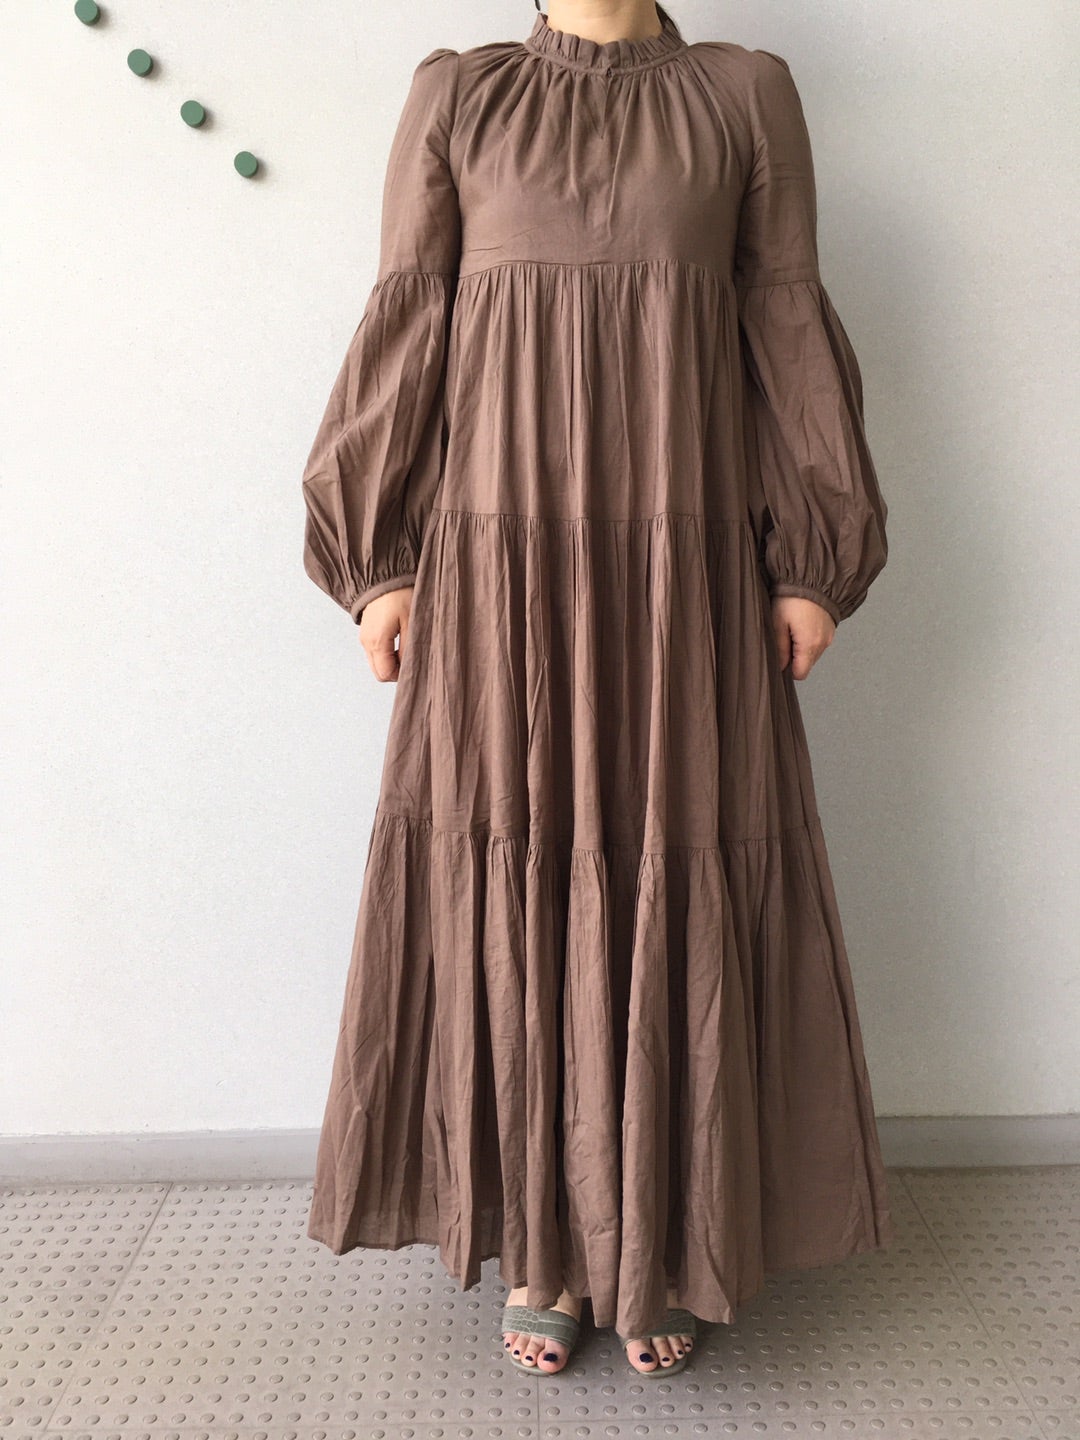 MARIHA 星明かりのドレス | TIARA LACHIC店のブログ